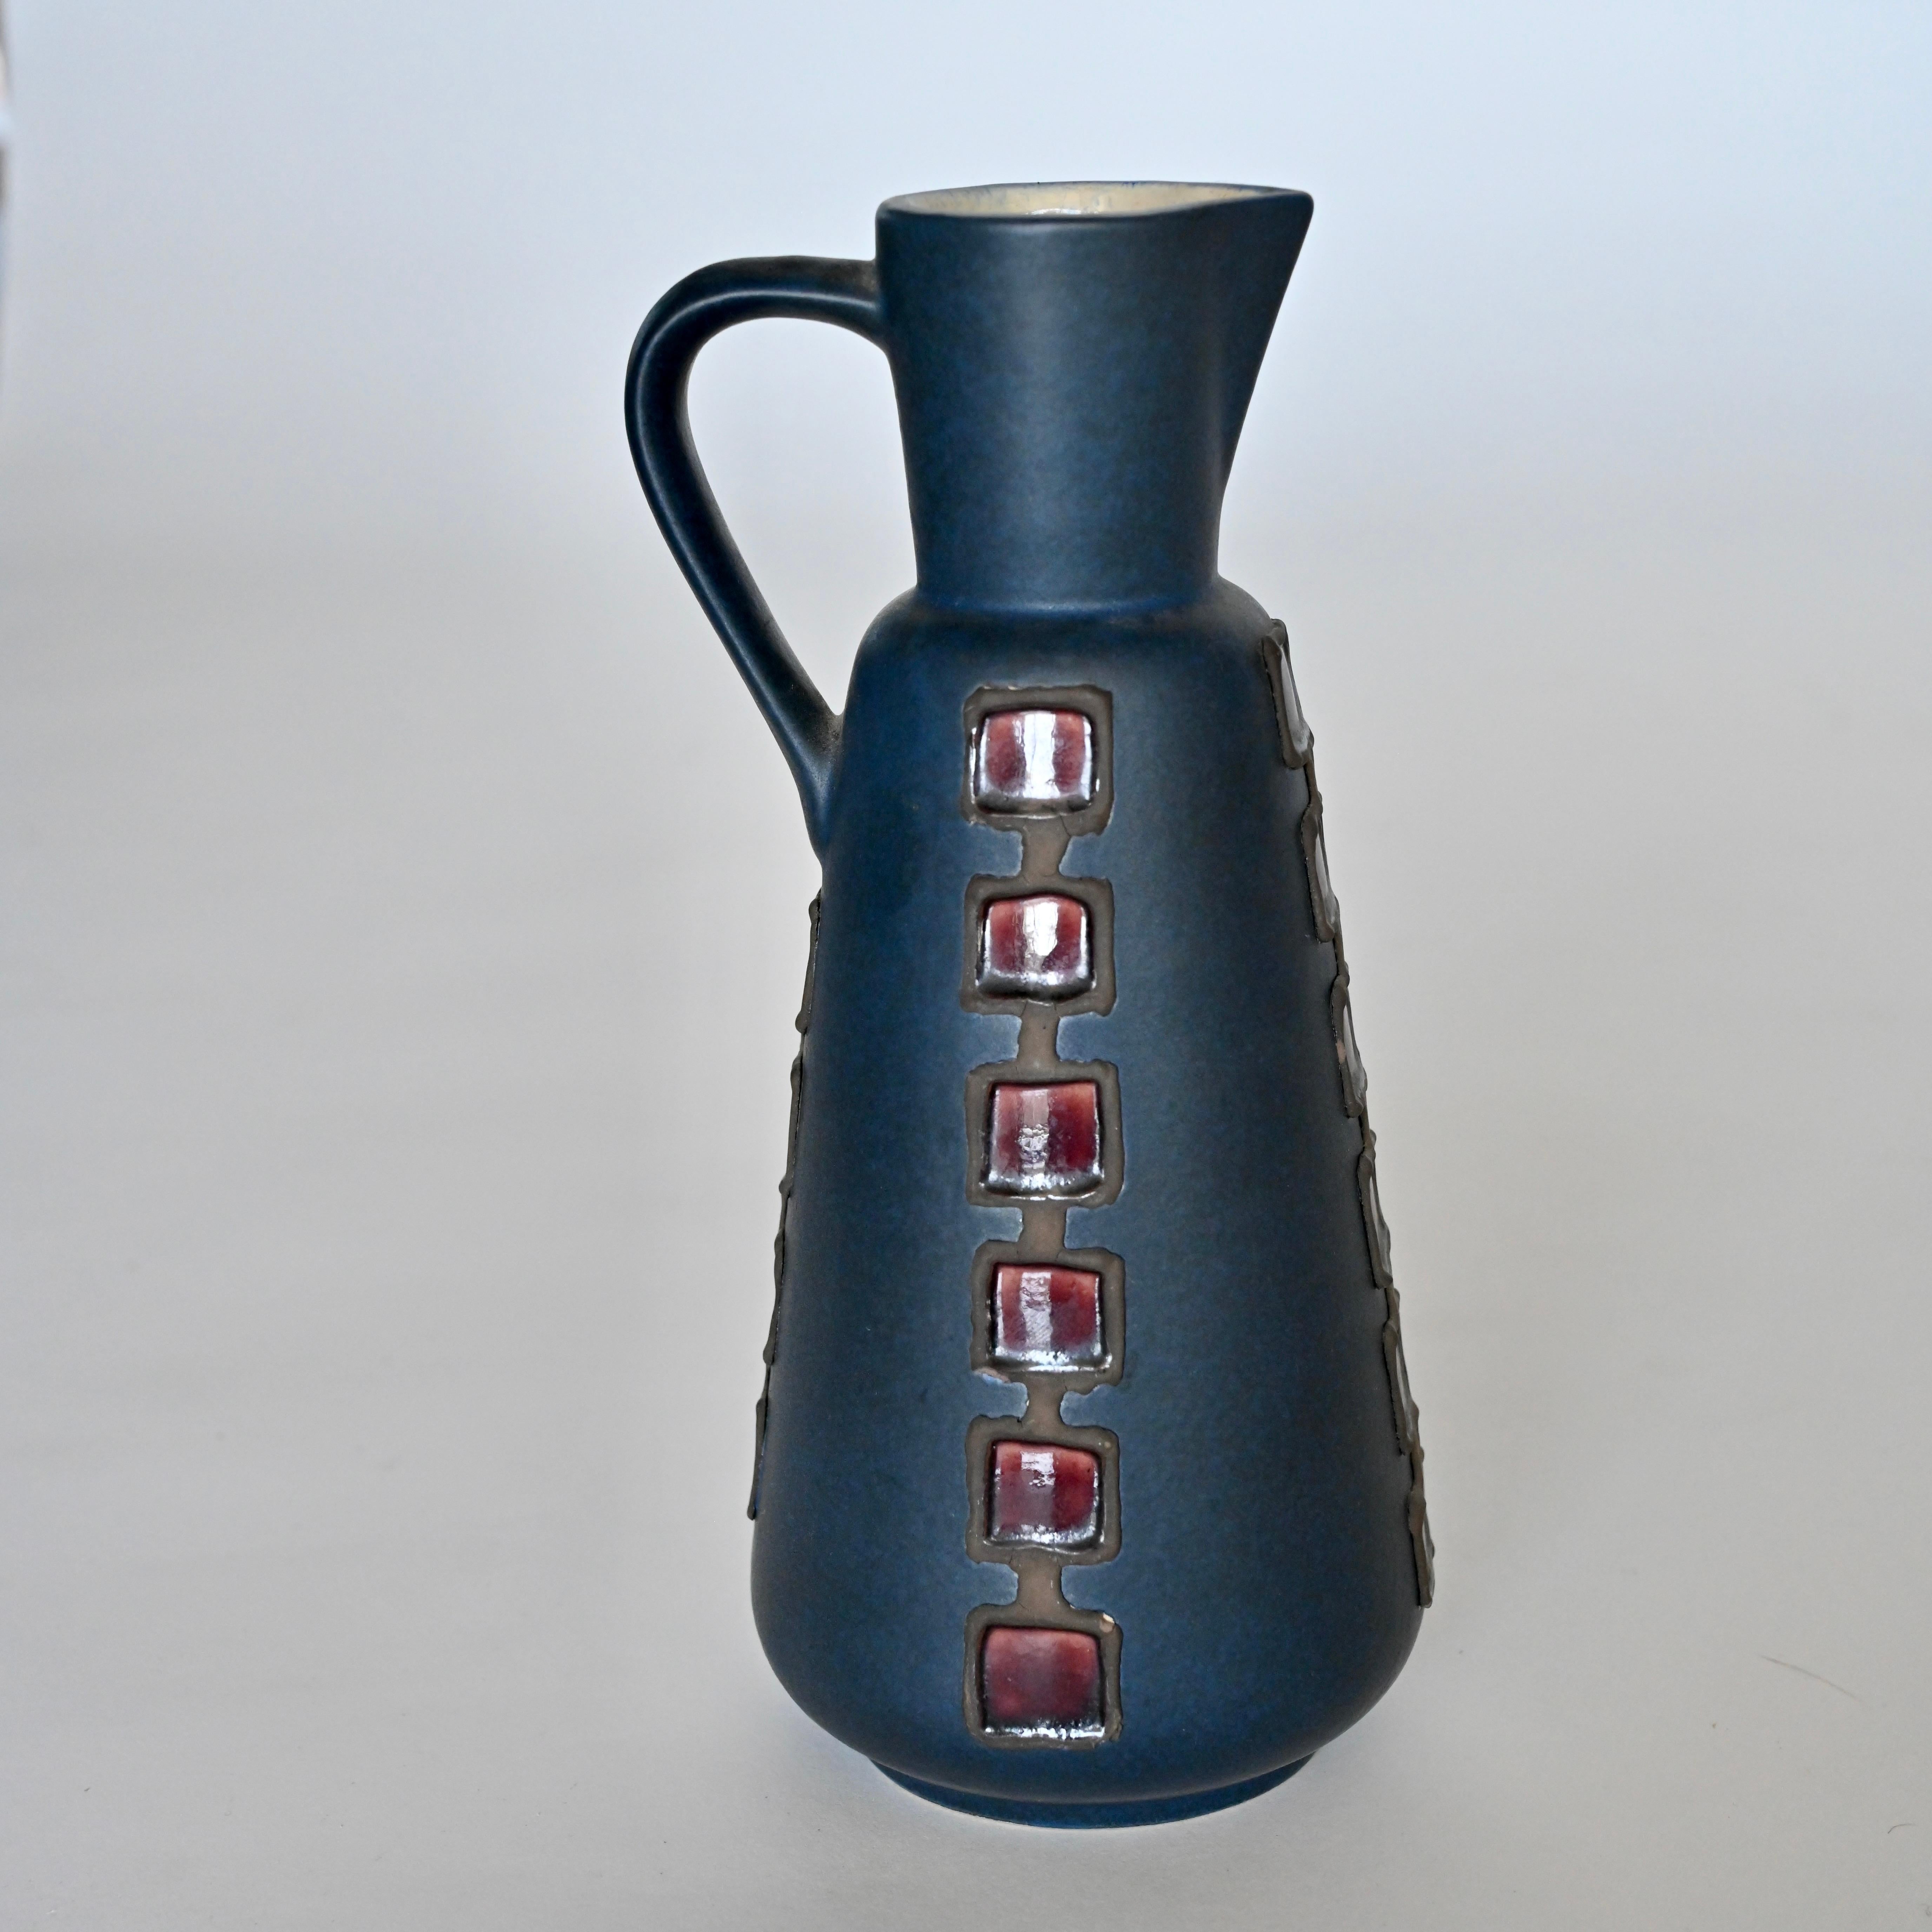 Unique blue glazed pitcher / vase with decorative details. Marked 261/26 at bottom. Sweden, Mid 20th Century.